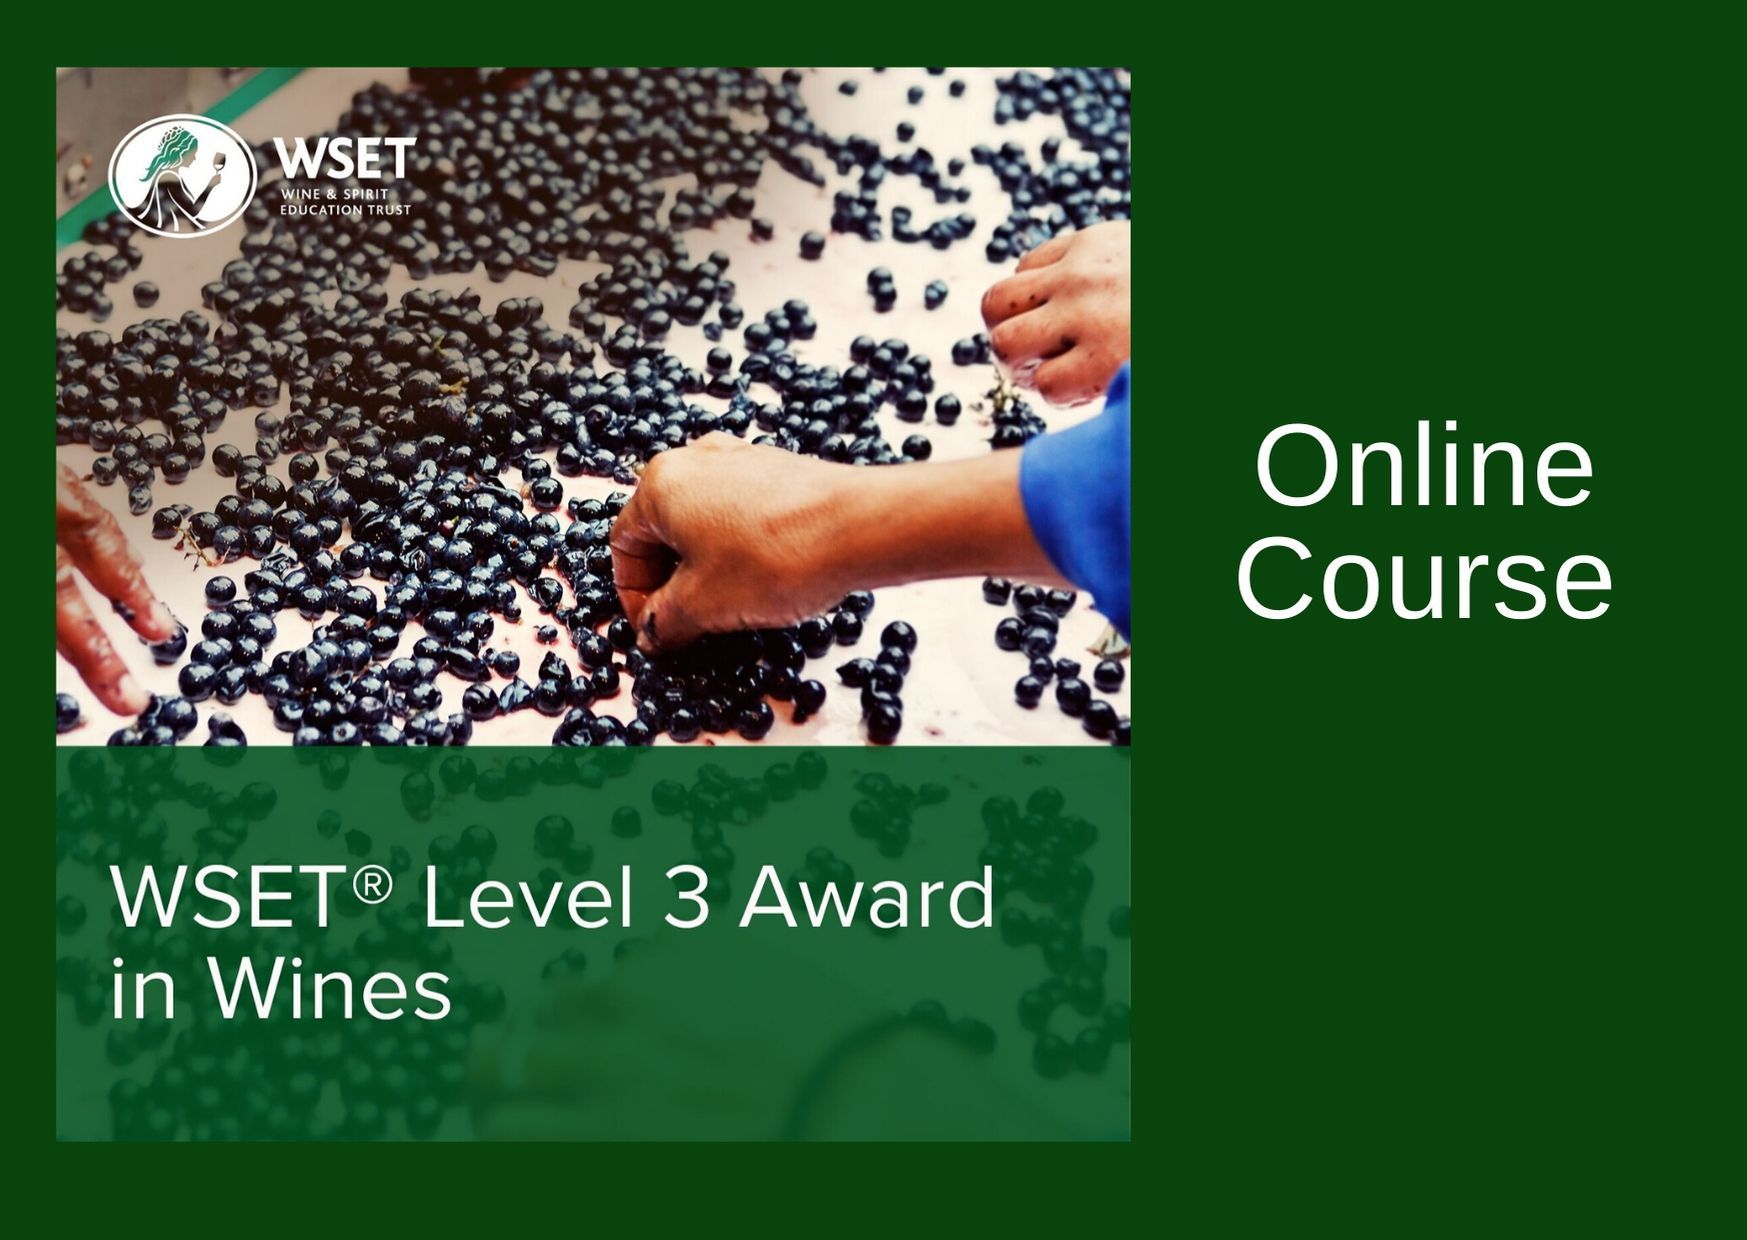  WSET Level 3 Award in Wines & Exam - Online